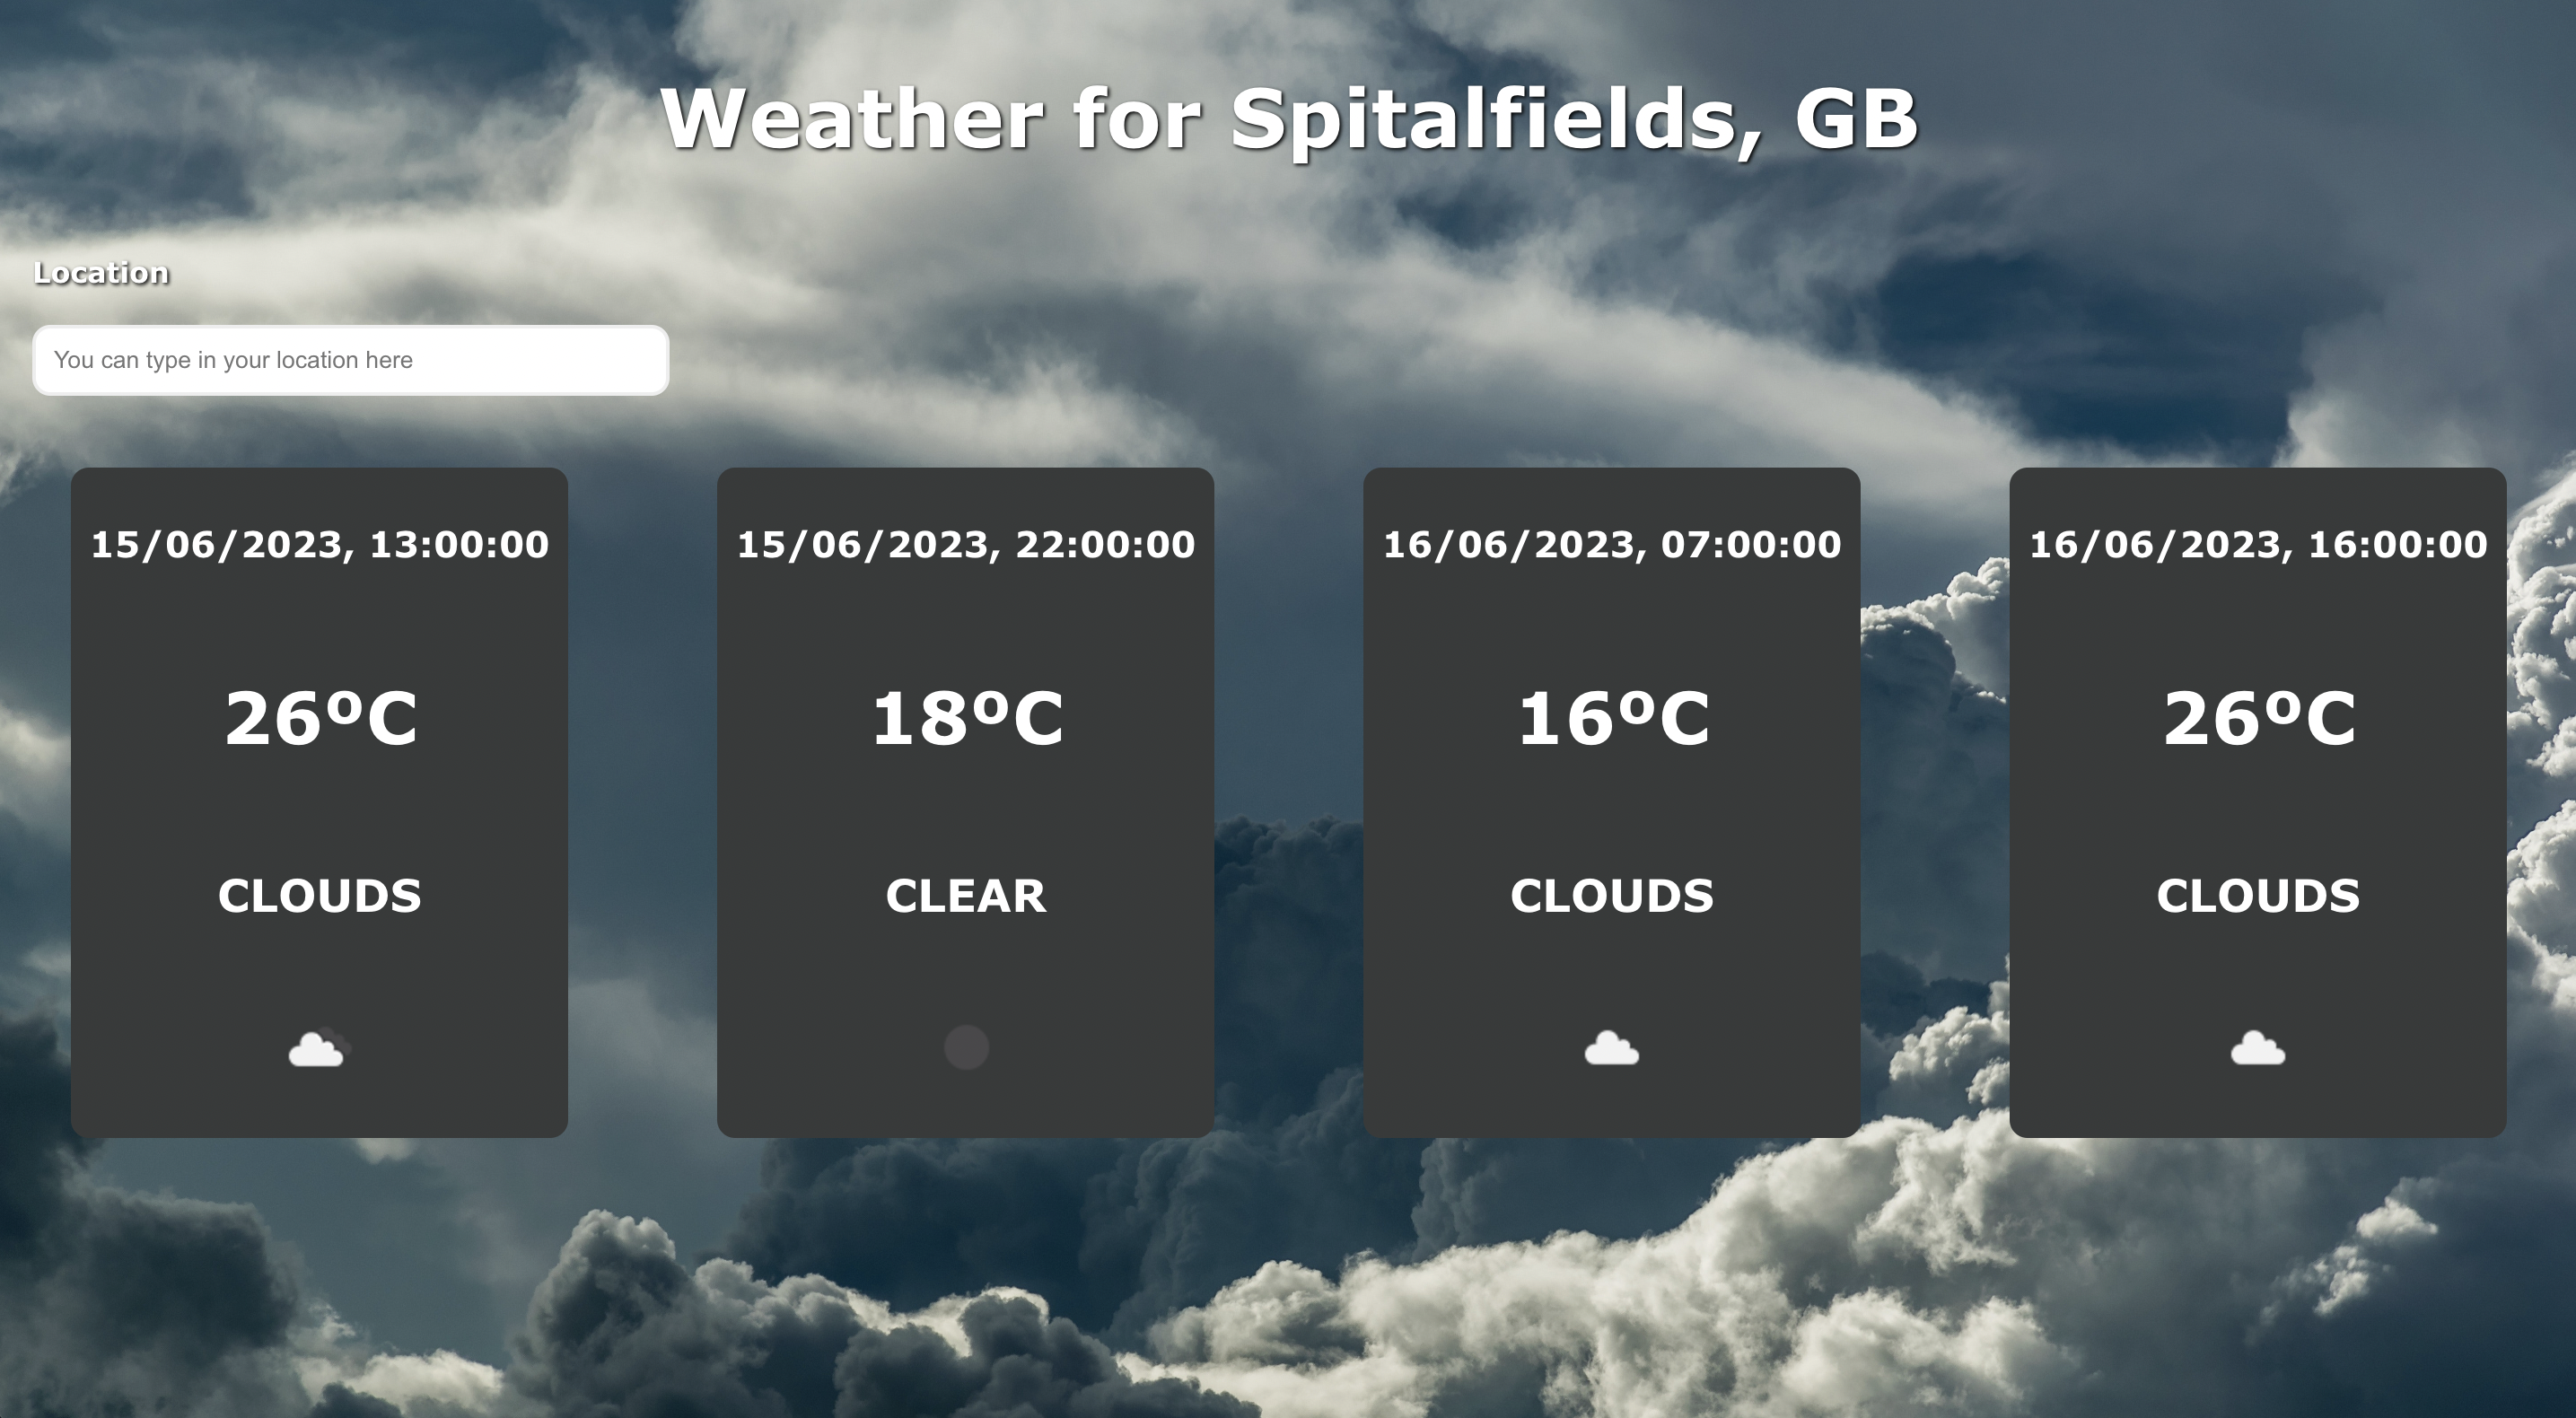 Weather forecast screenshot